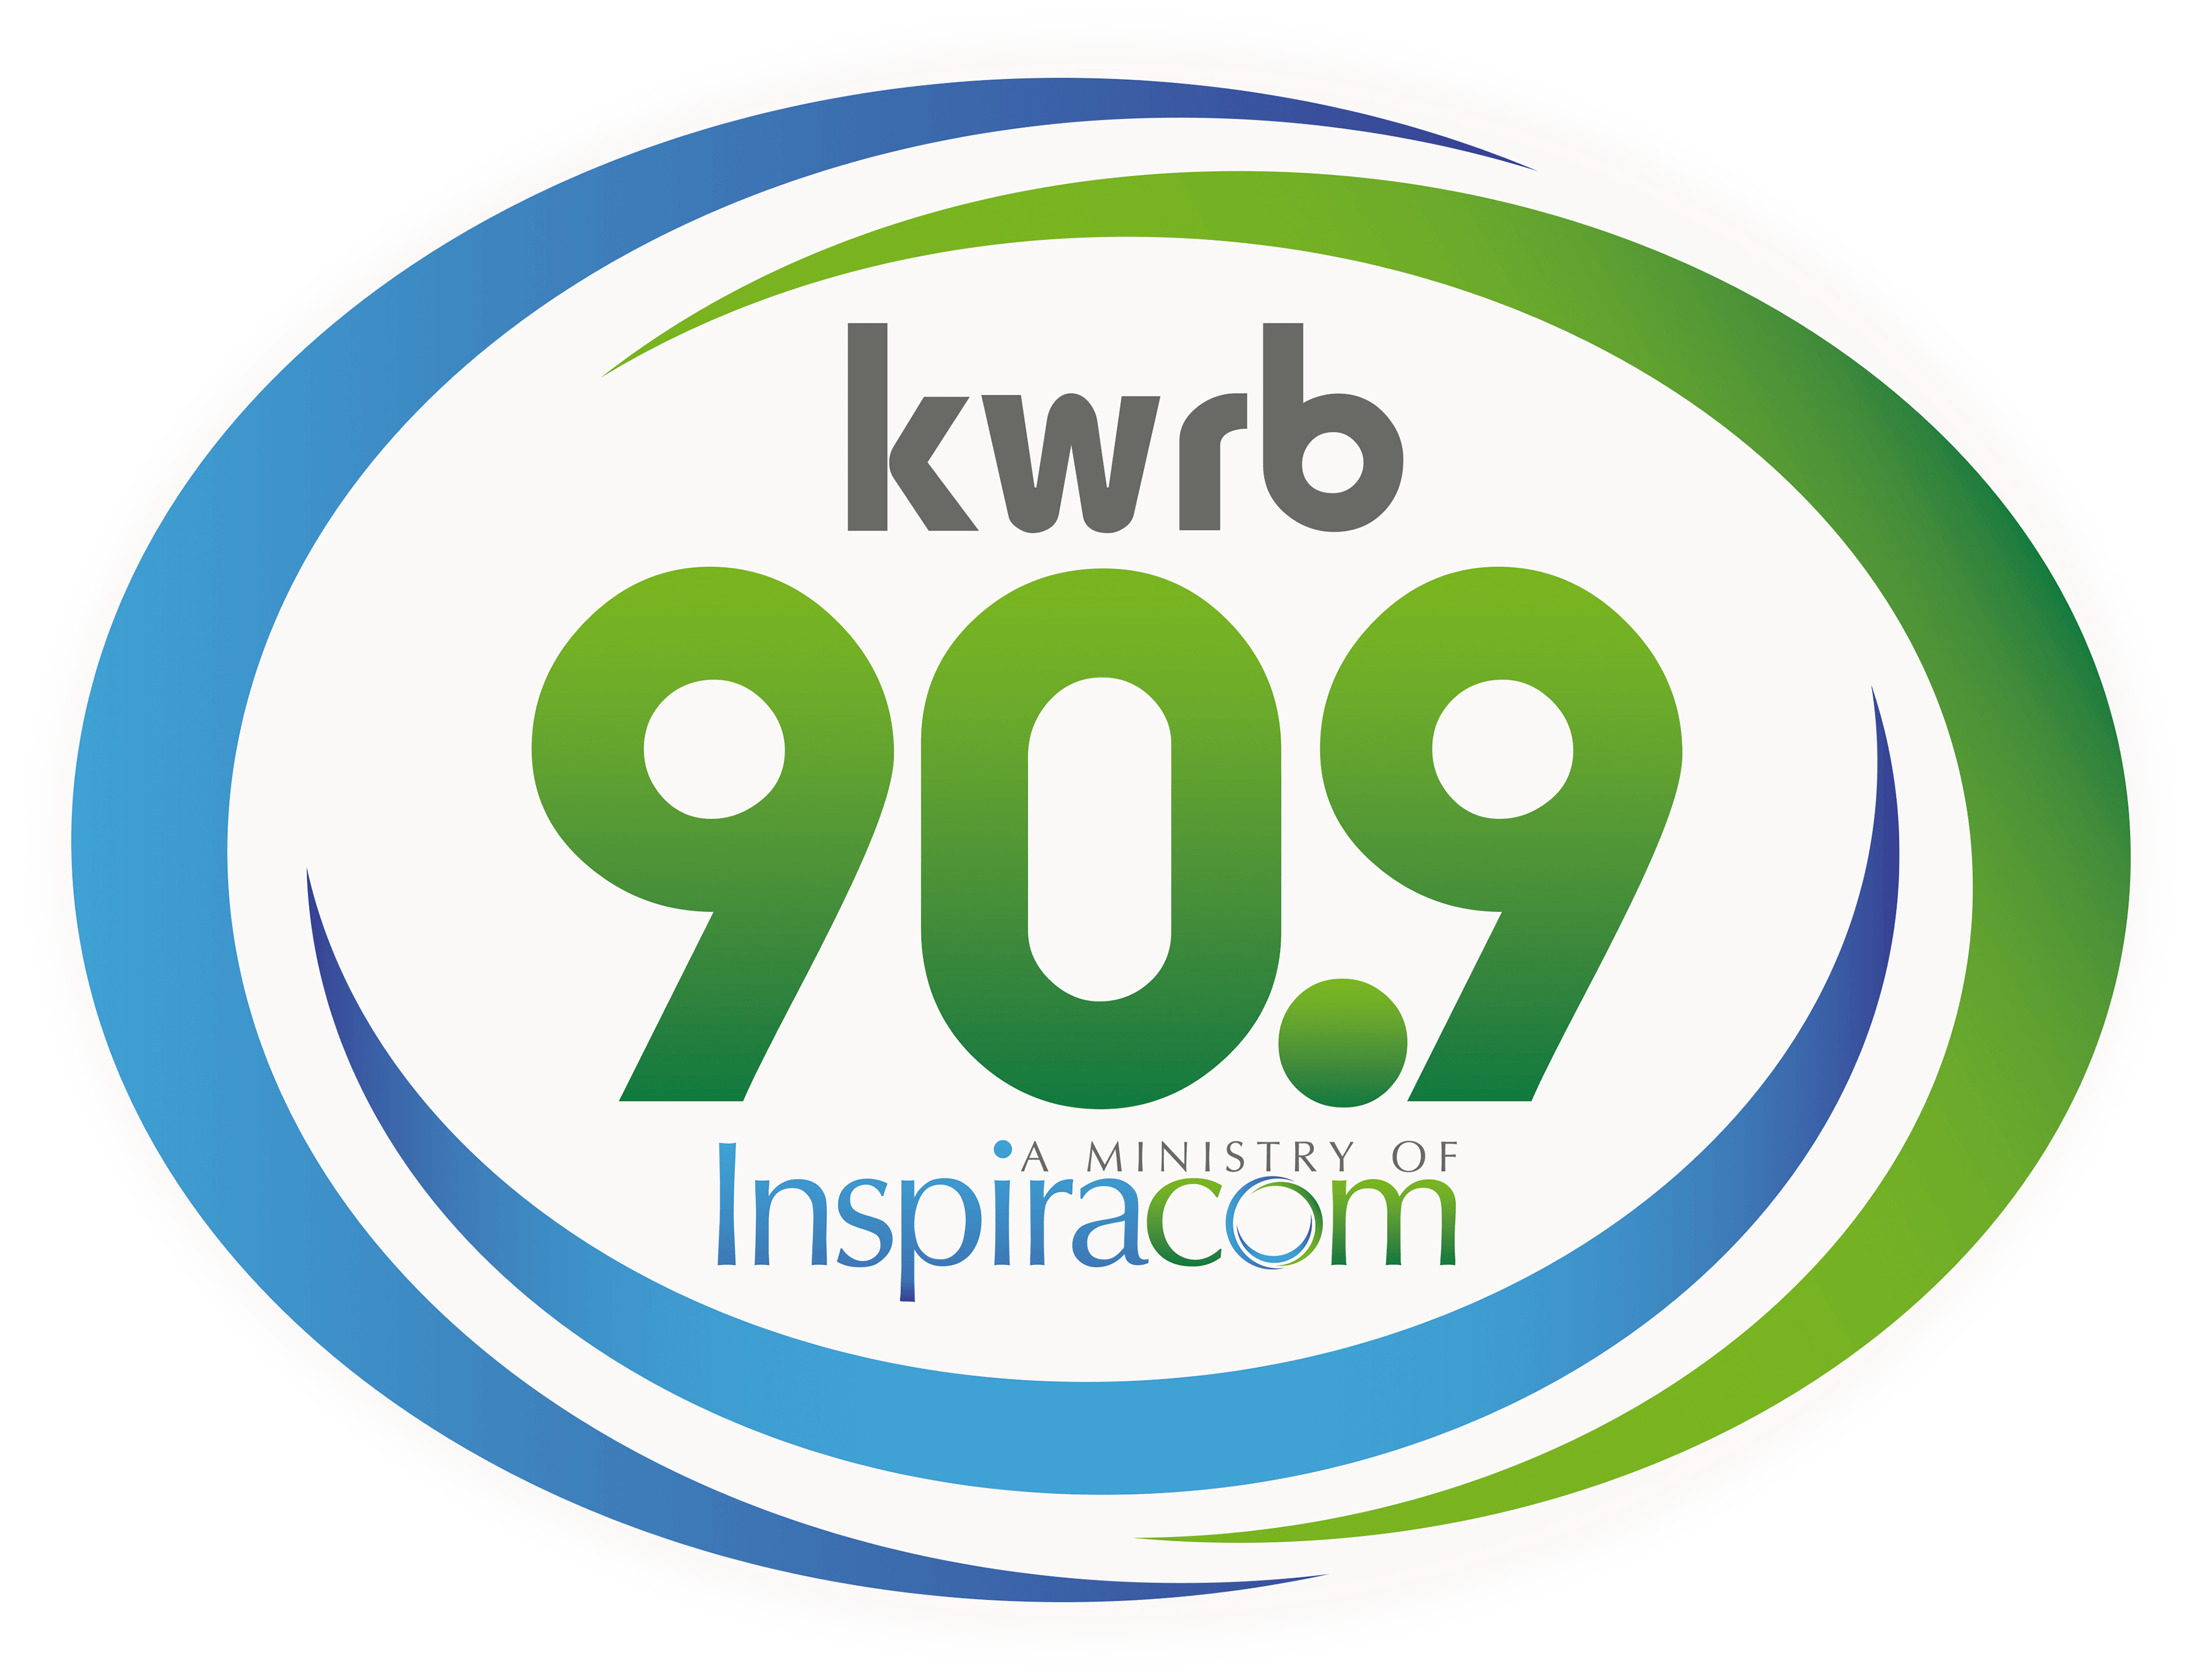 World Radio Network - KWRB logo